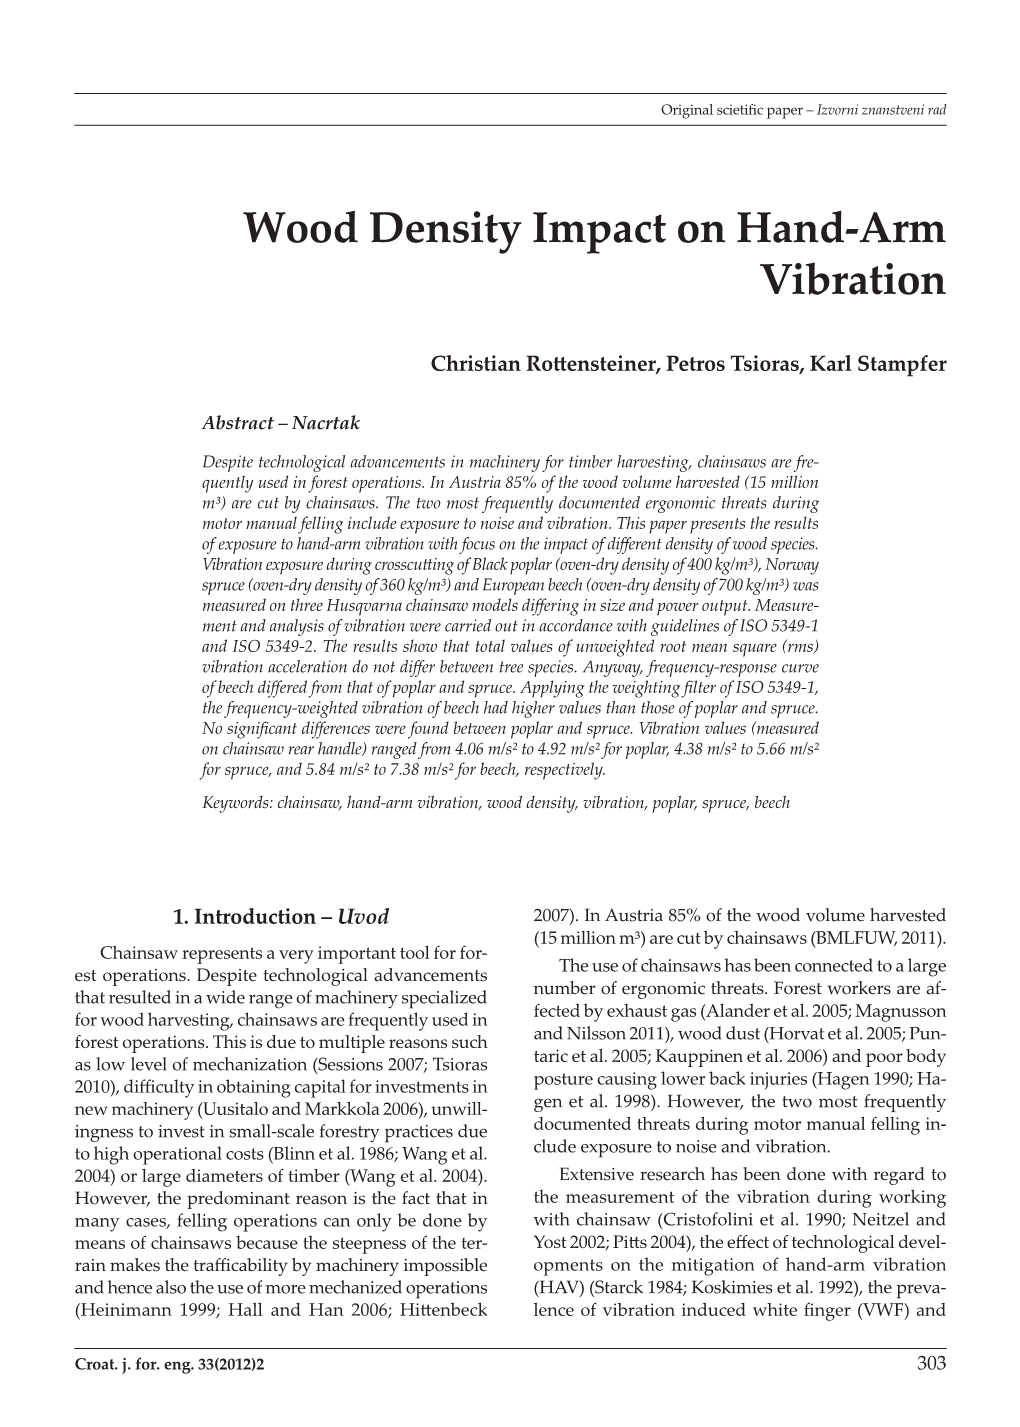 Wood Density Impact on Hand-Arm Vibration